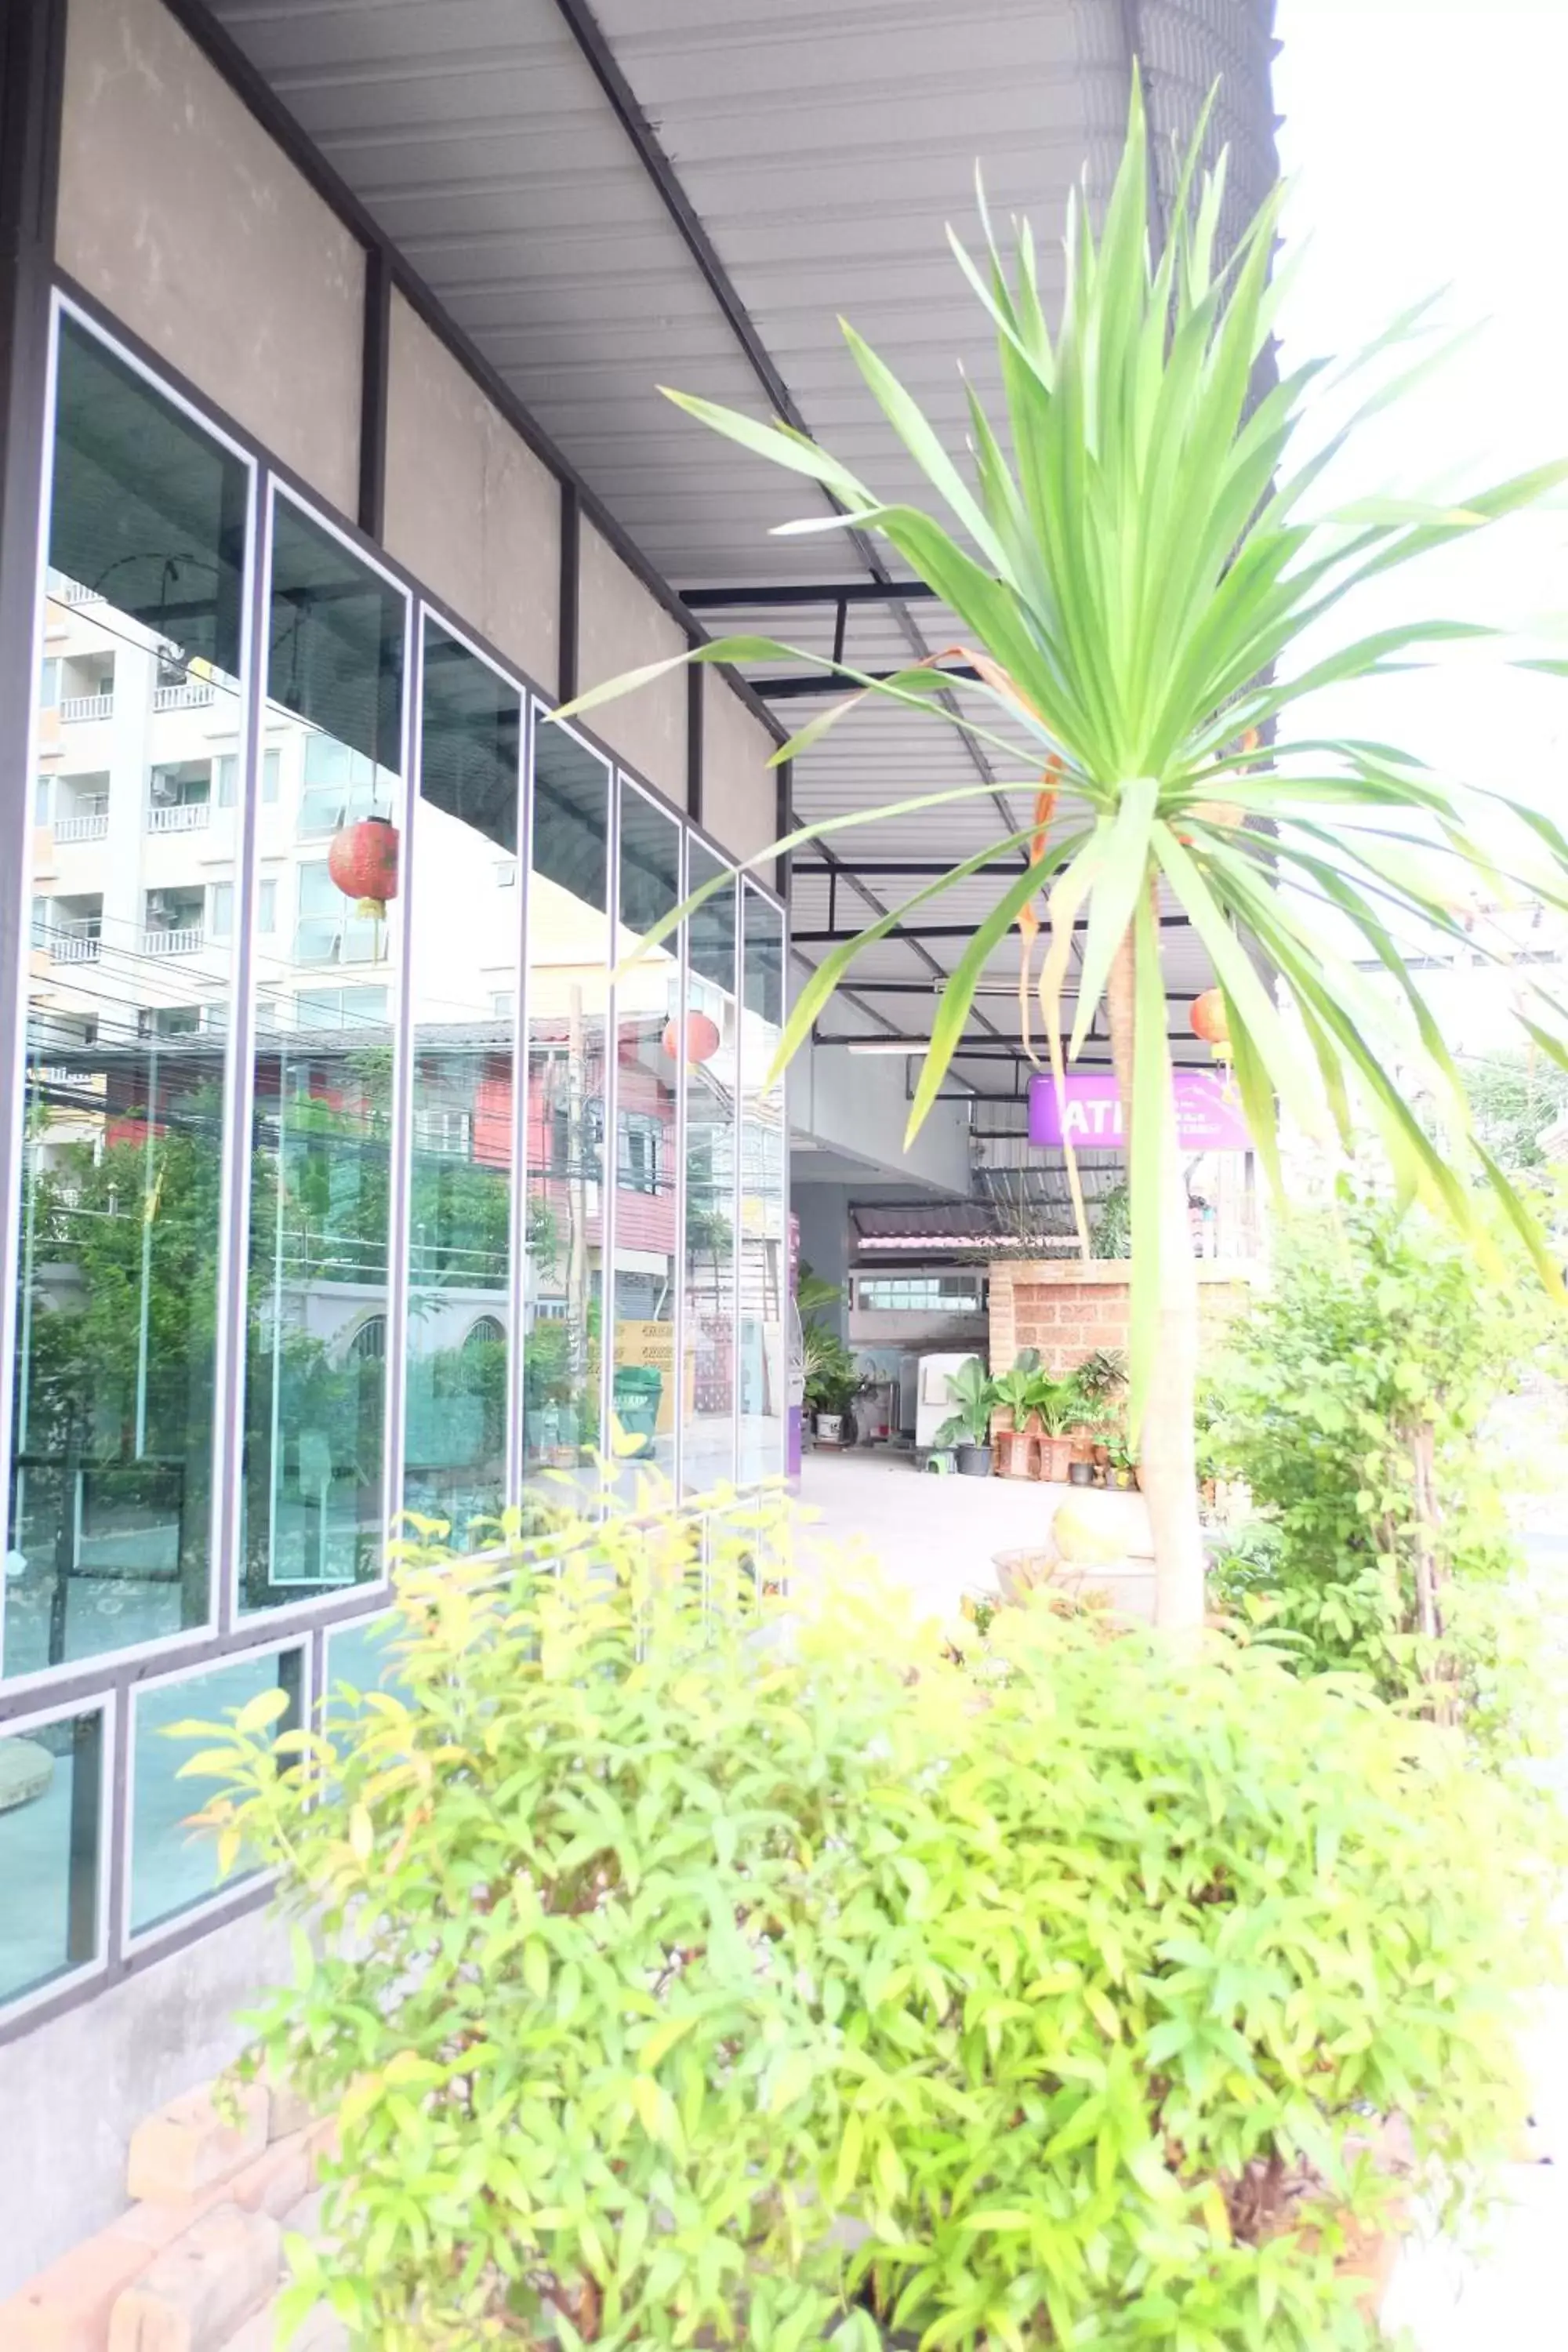 Facade/Entrance in Area 69 (Don Muang Airport)